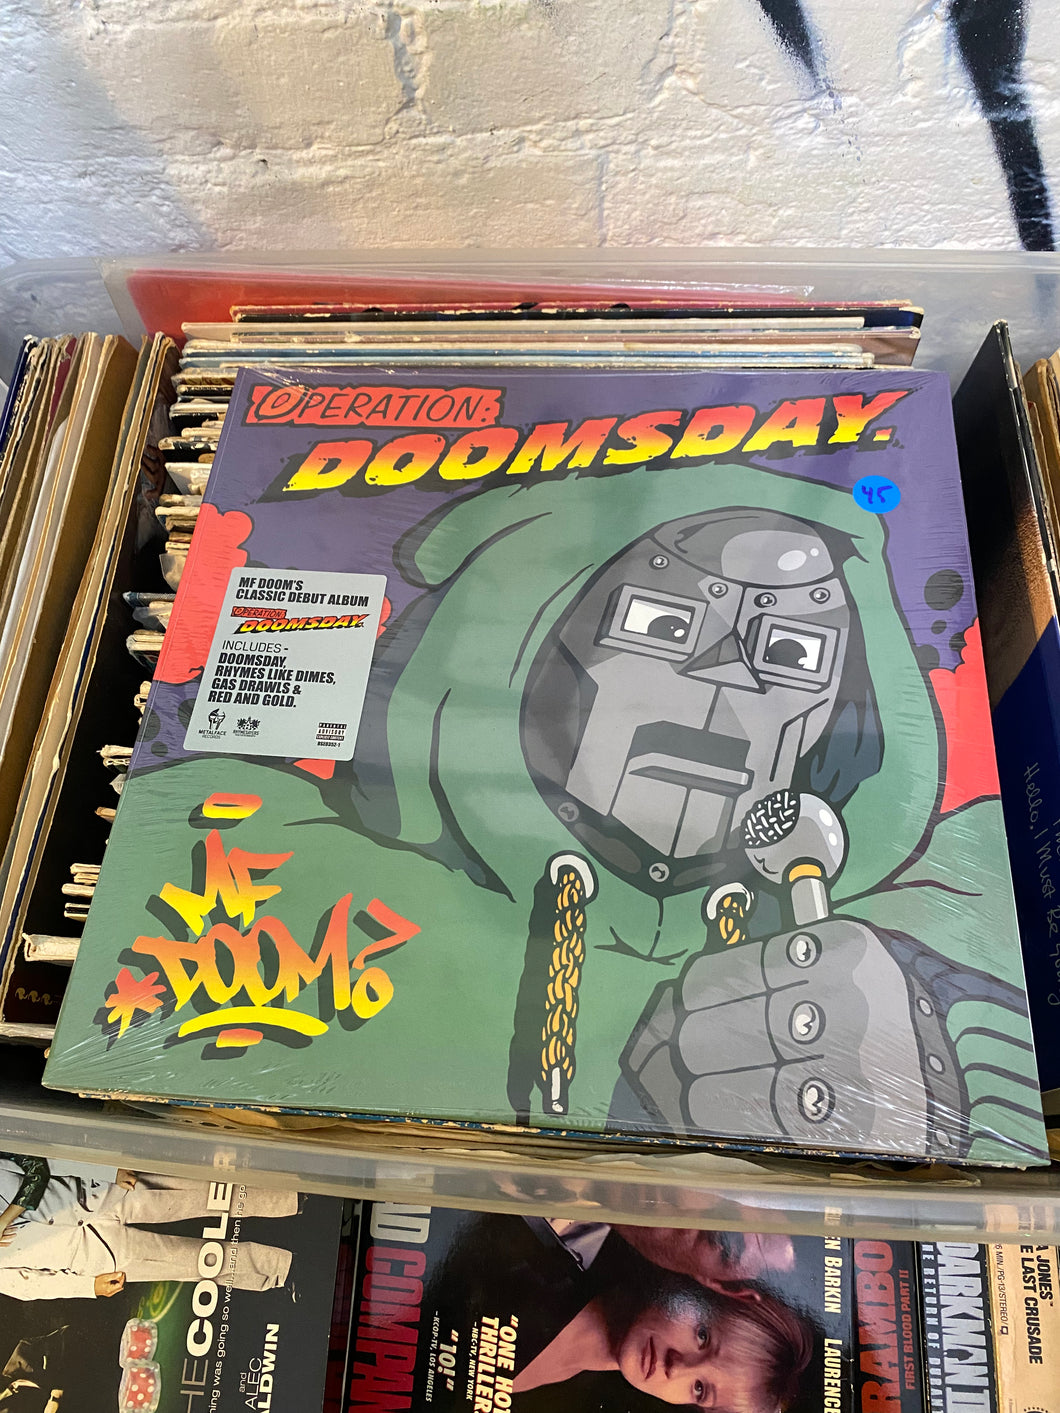 MF DOOM “Operation Doomsday” SEALED LP